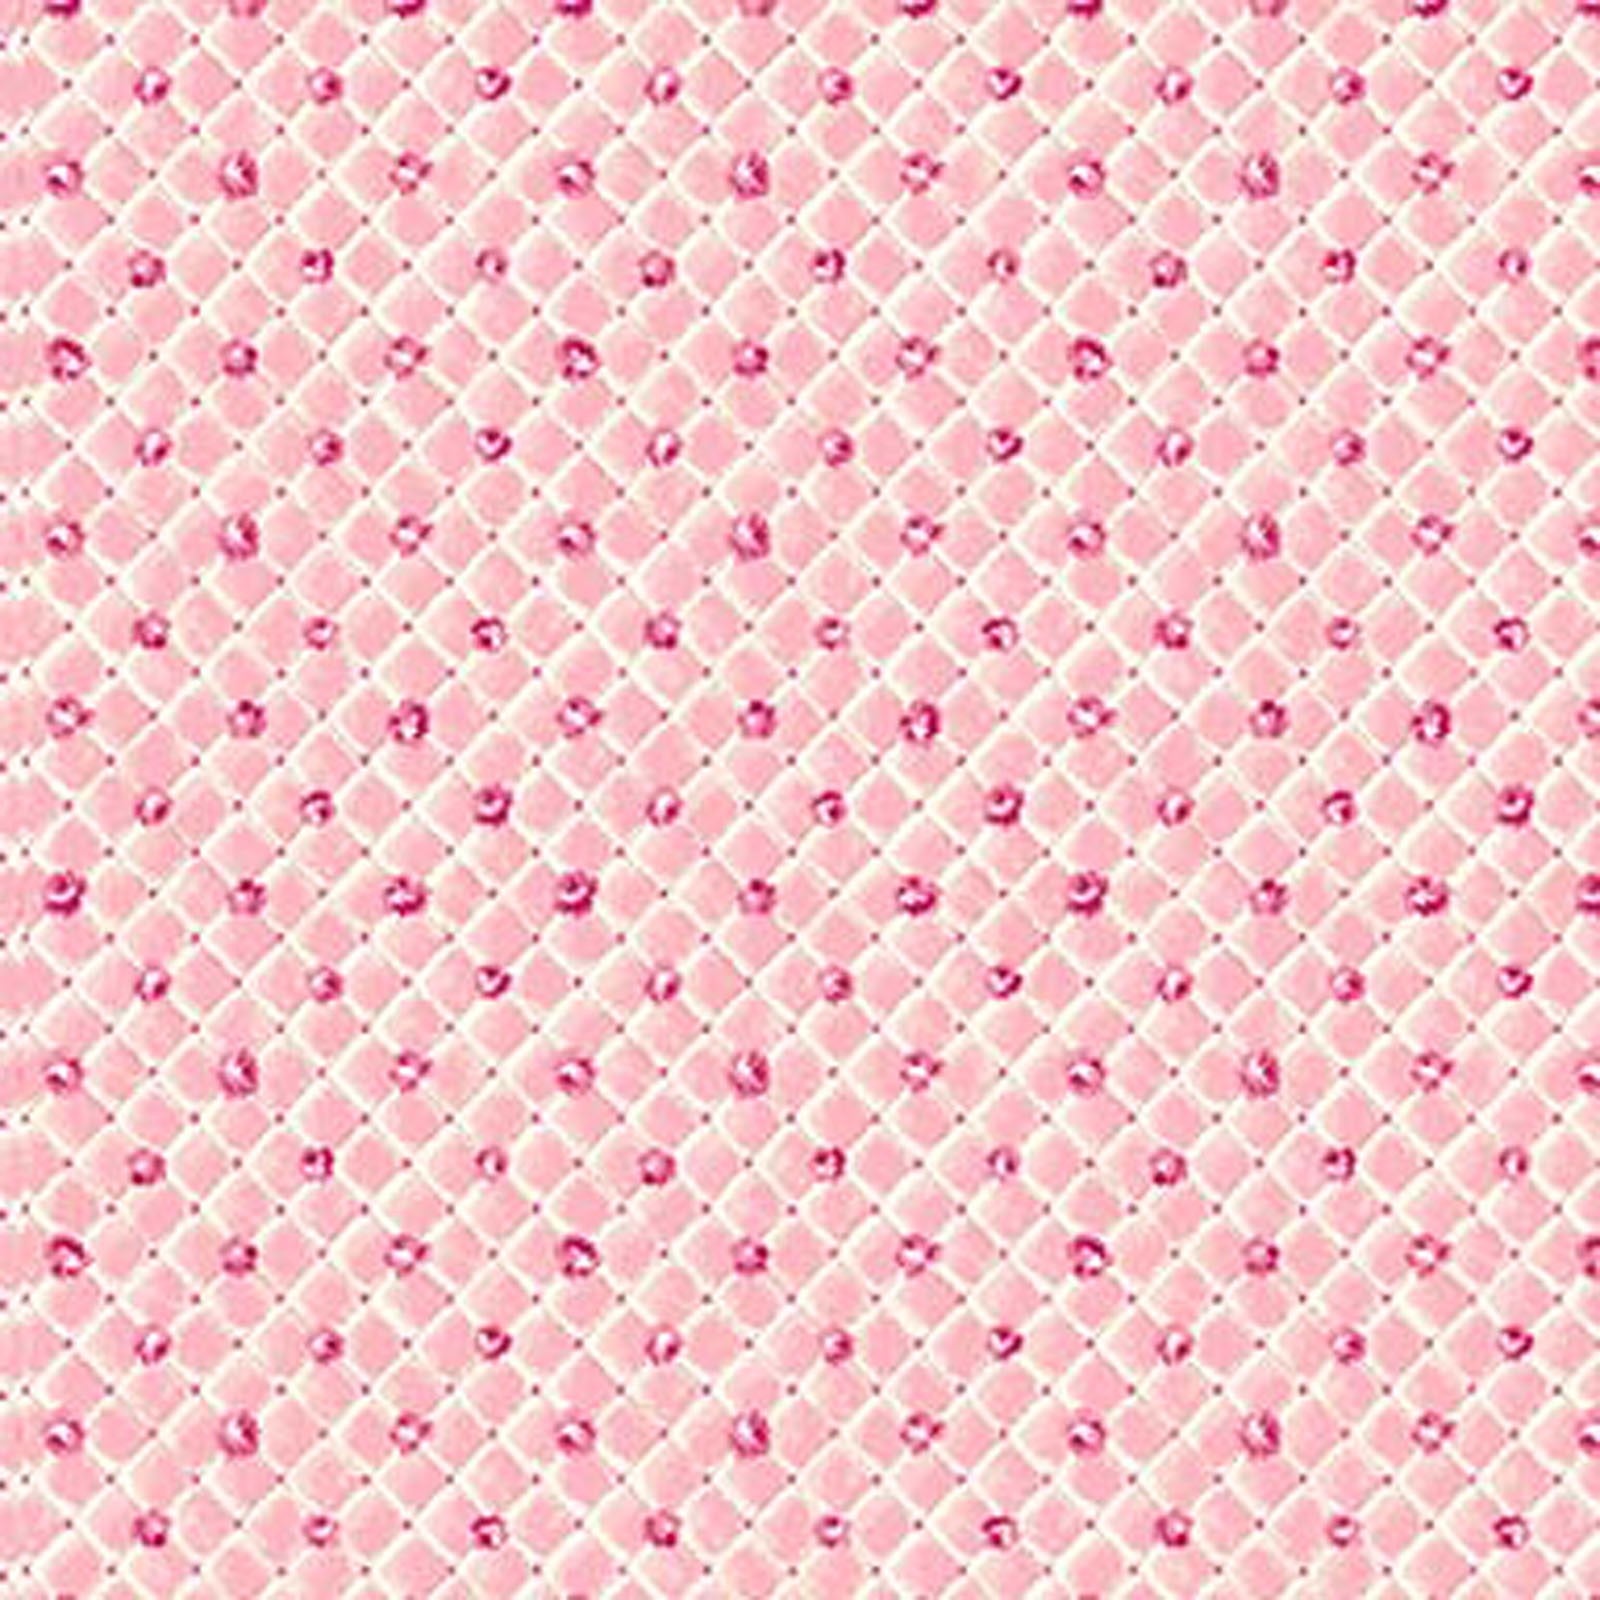 Rose Garden RU2410-15B Rose Lattice Print  on Pink by Quilt Gate